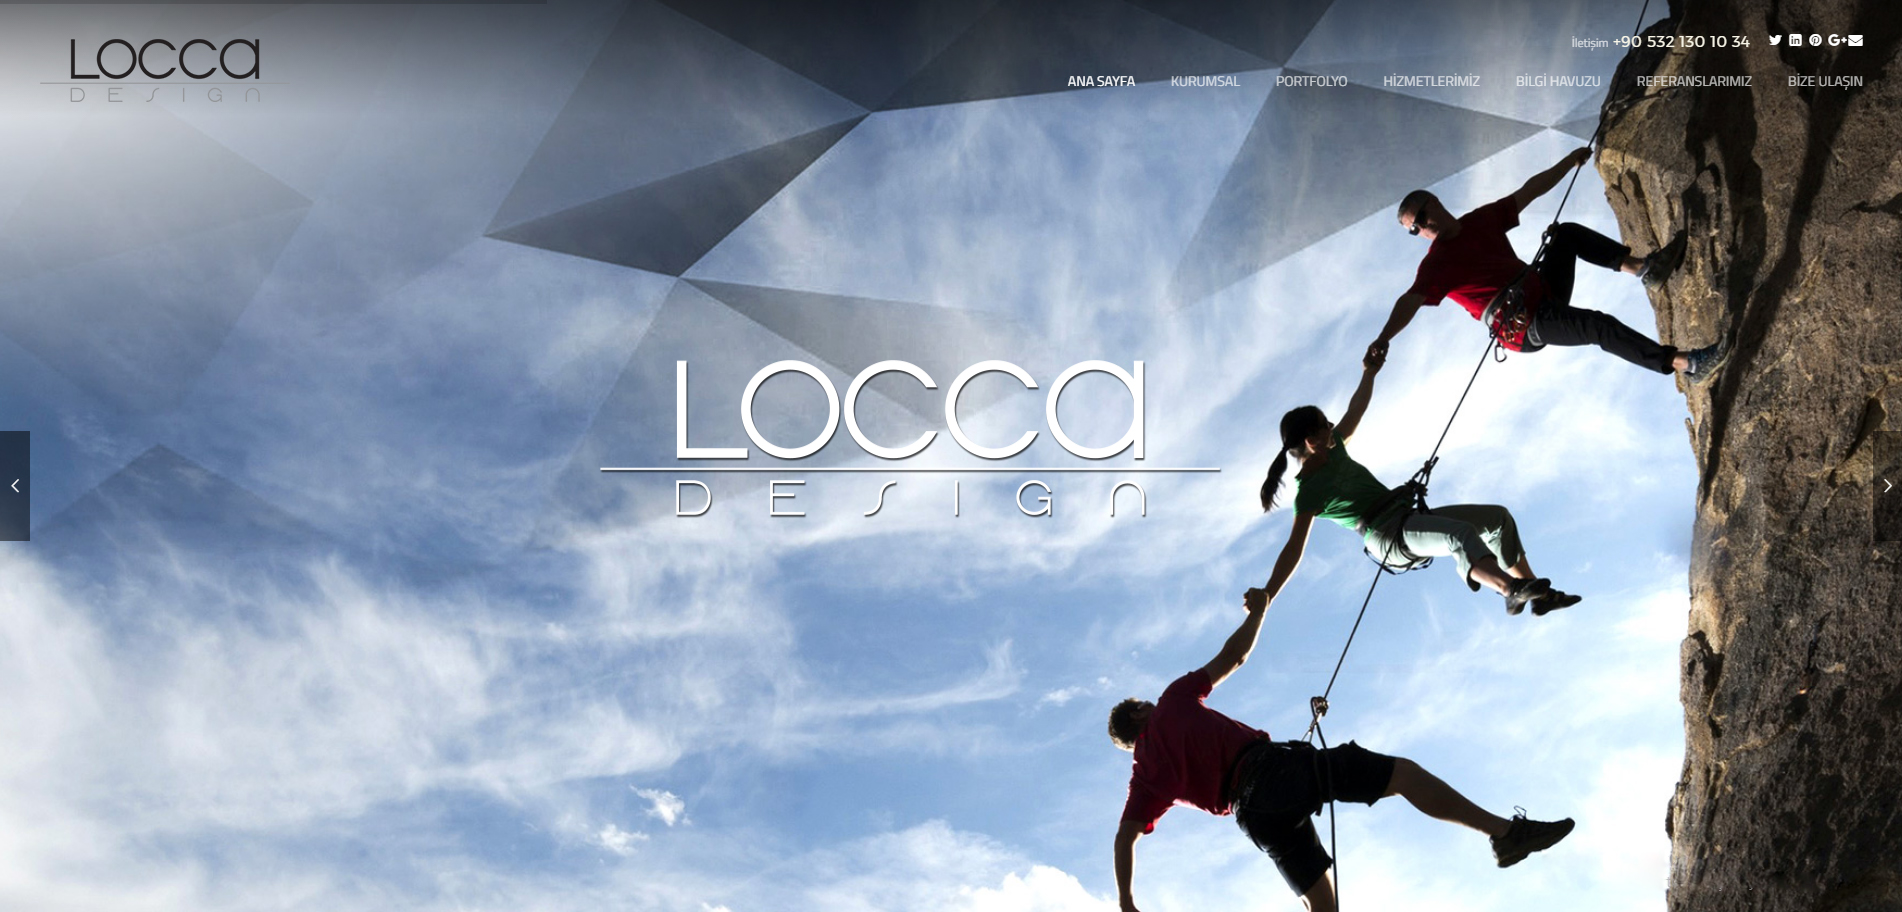 Web Site Tasarımı  Locca design web site tasarımı ve after effects video